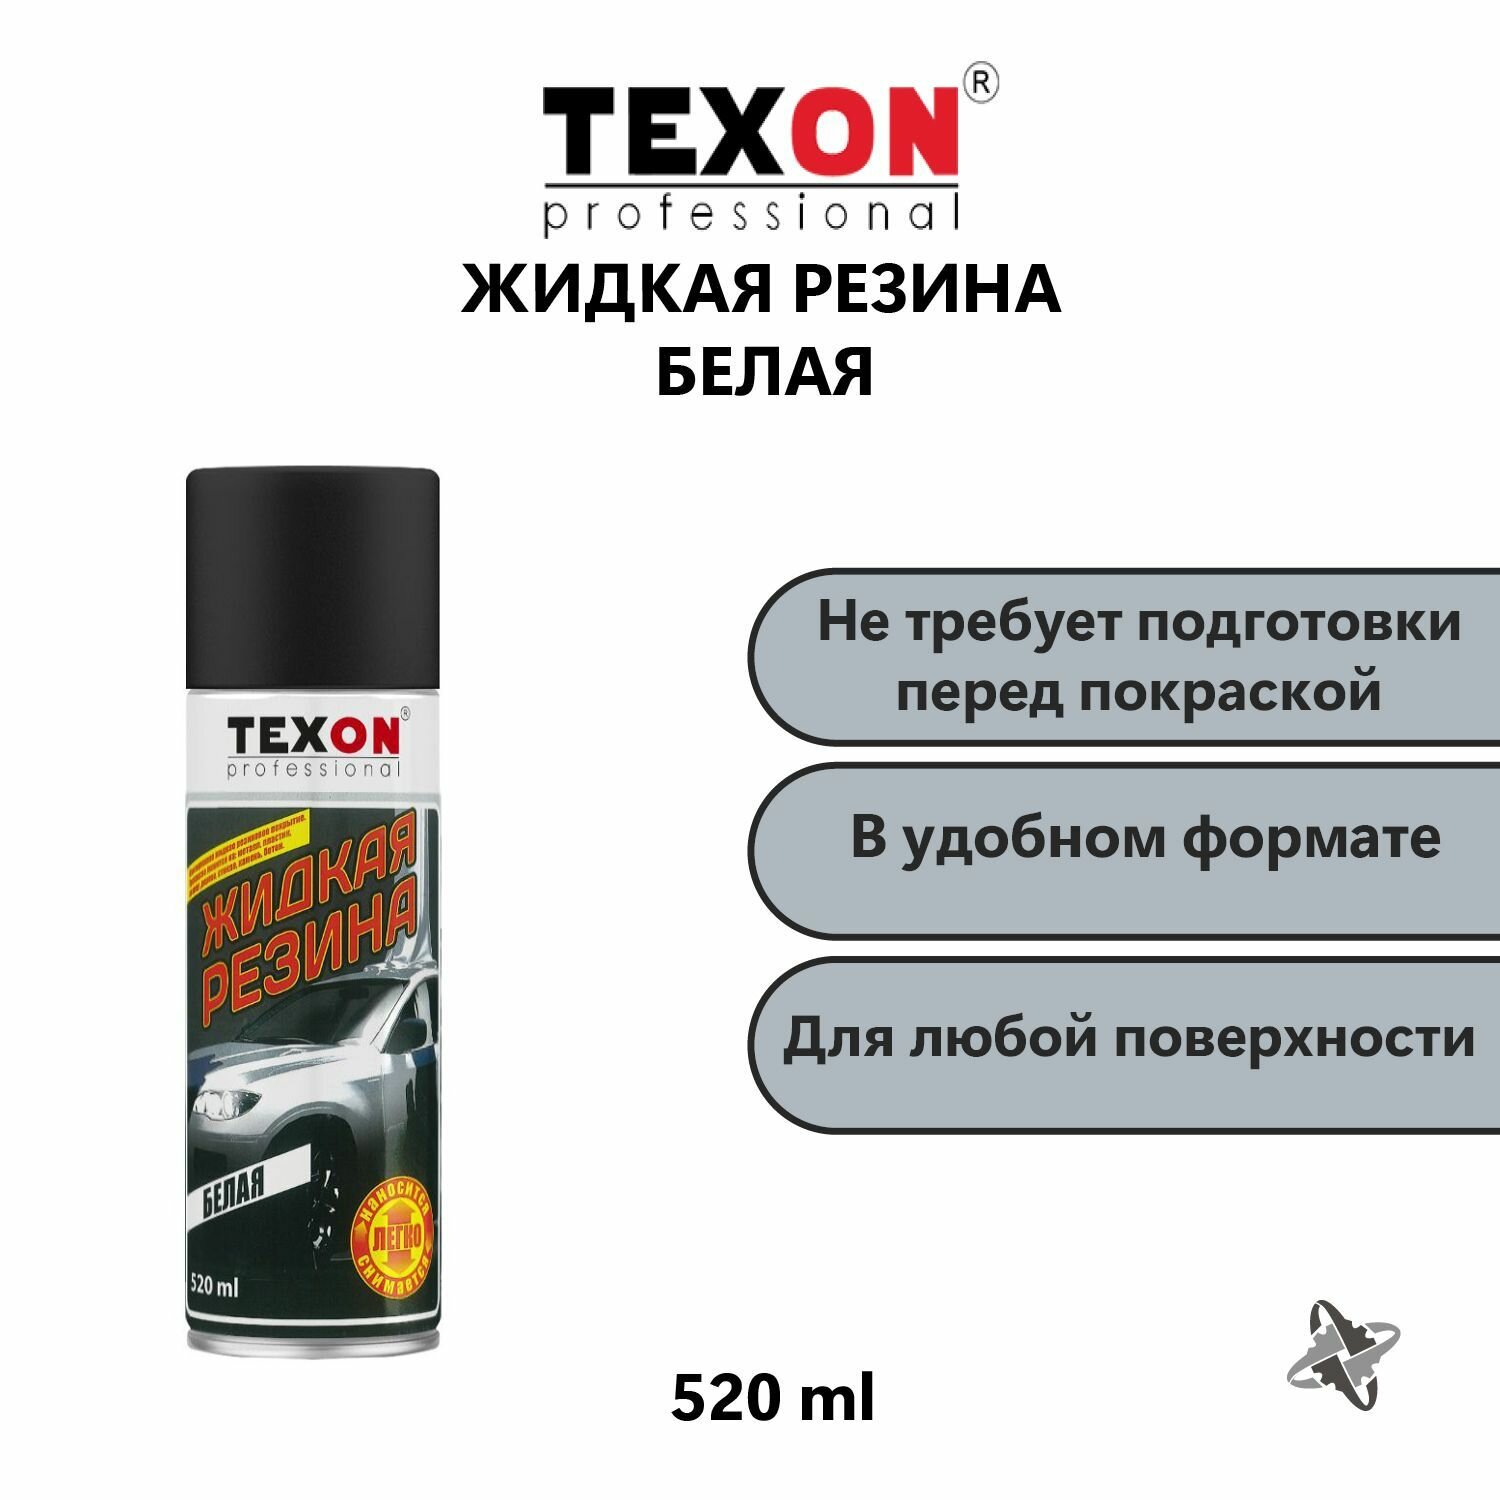 Белая жидкая резина 520мл аэрозоль TEXON